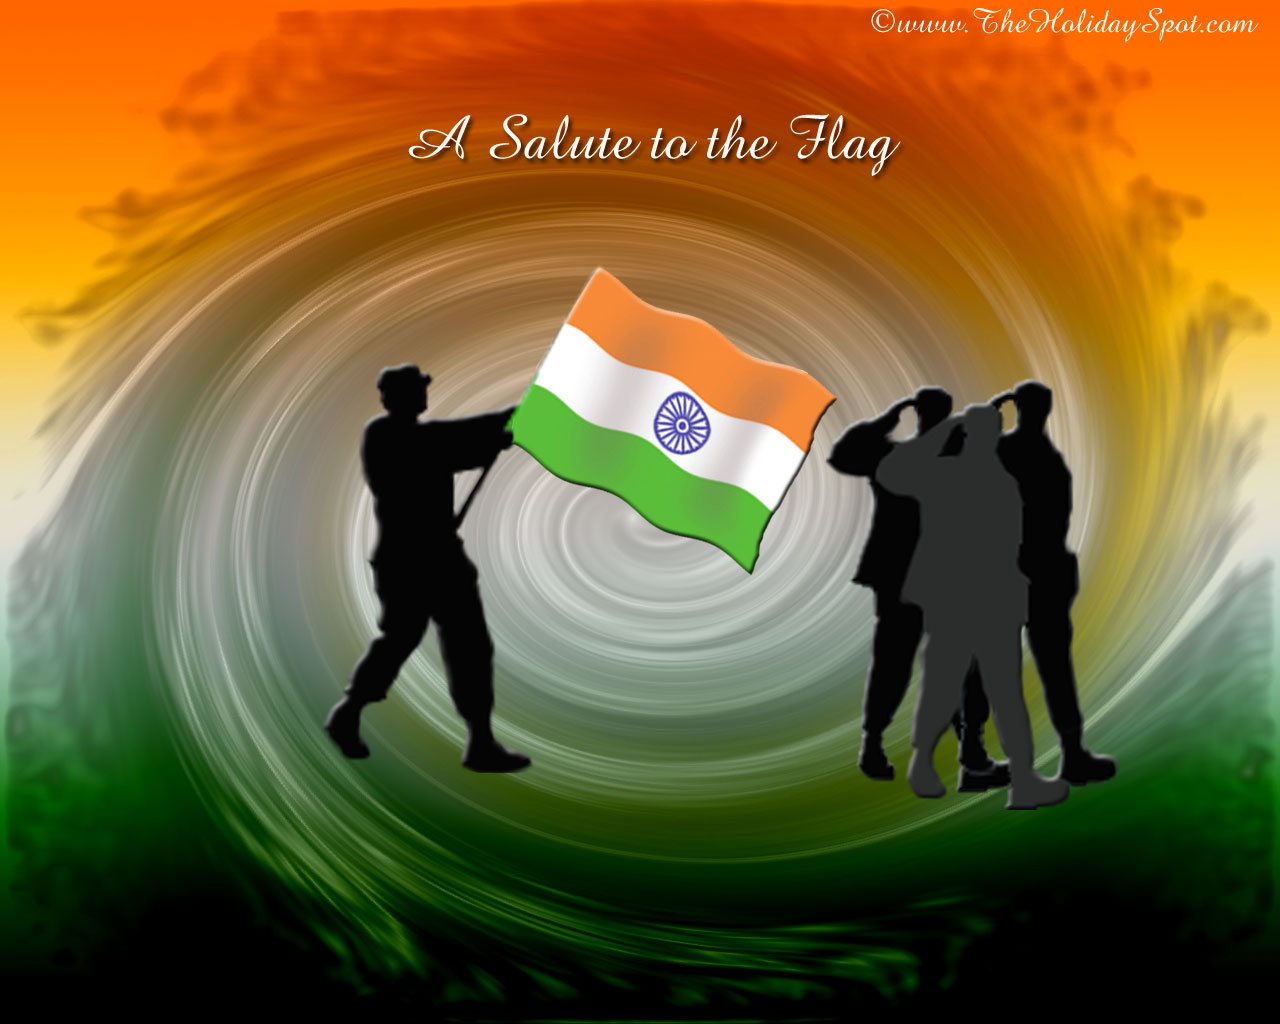 Indian National Flag Wallpaper